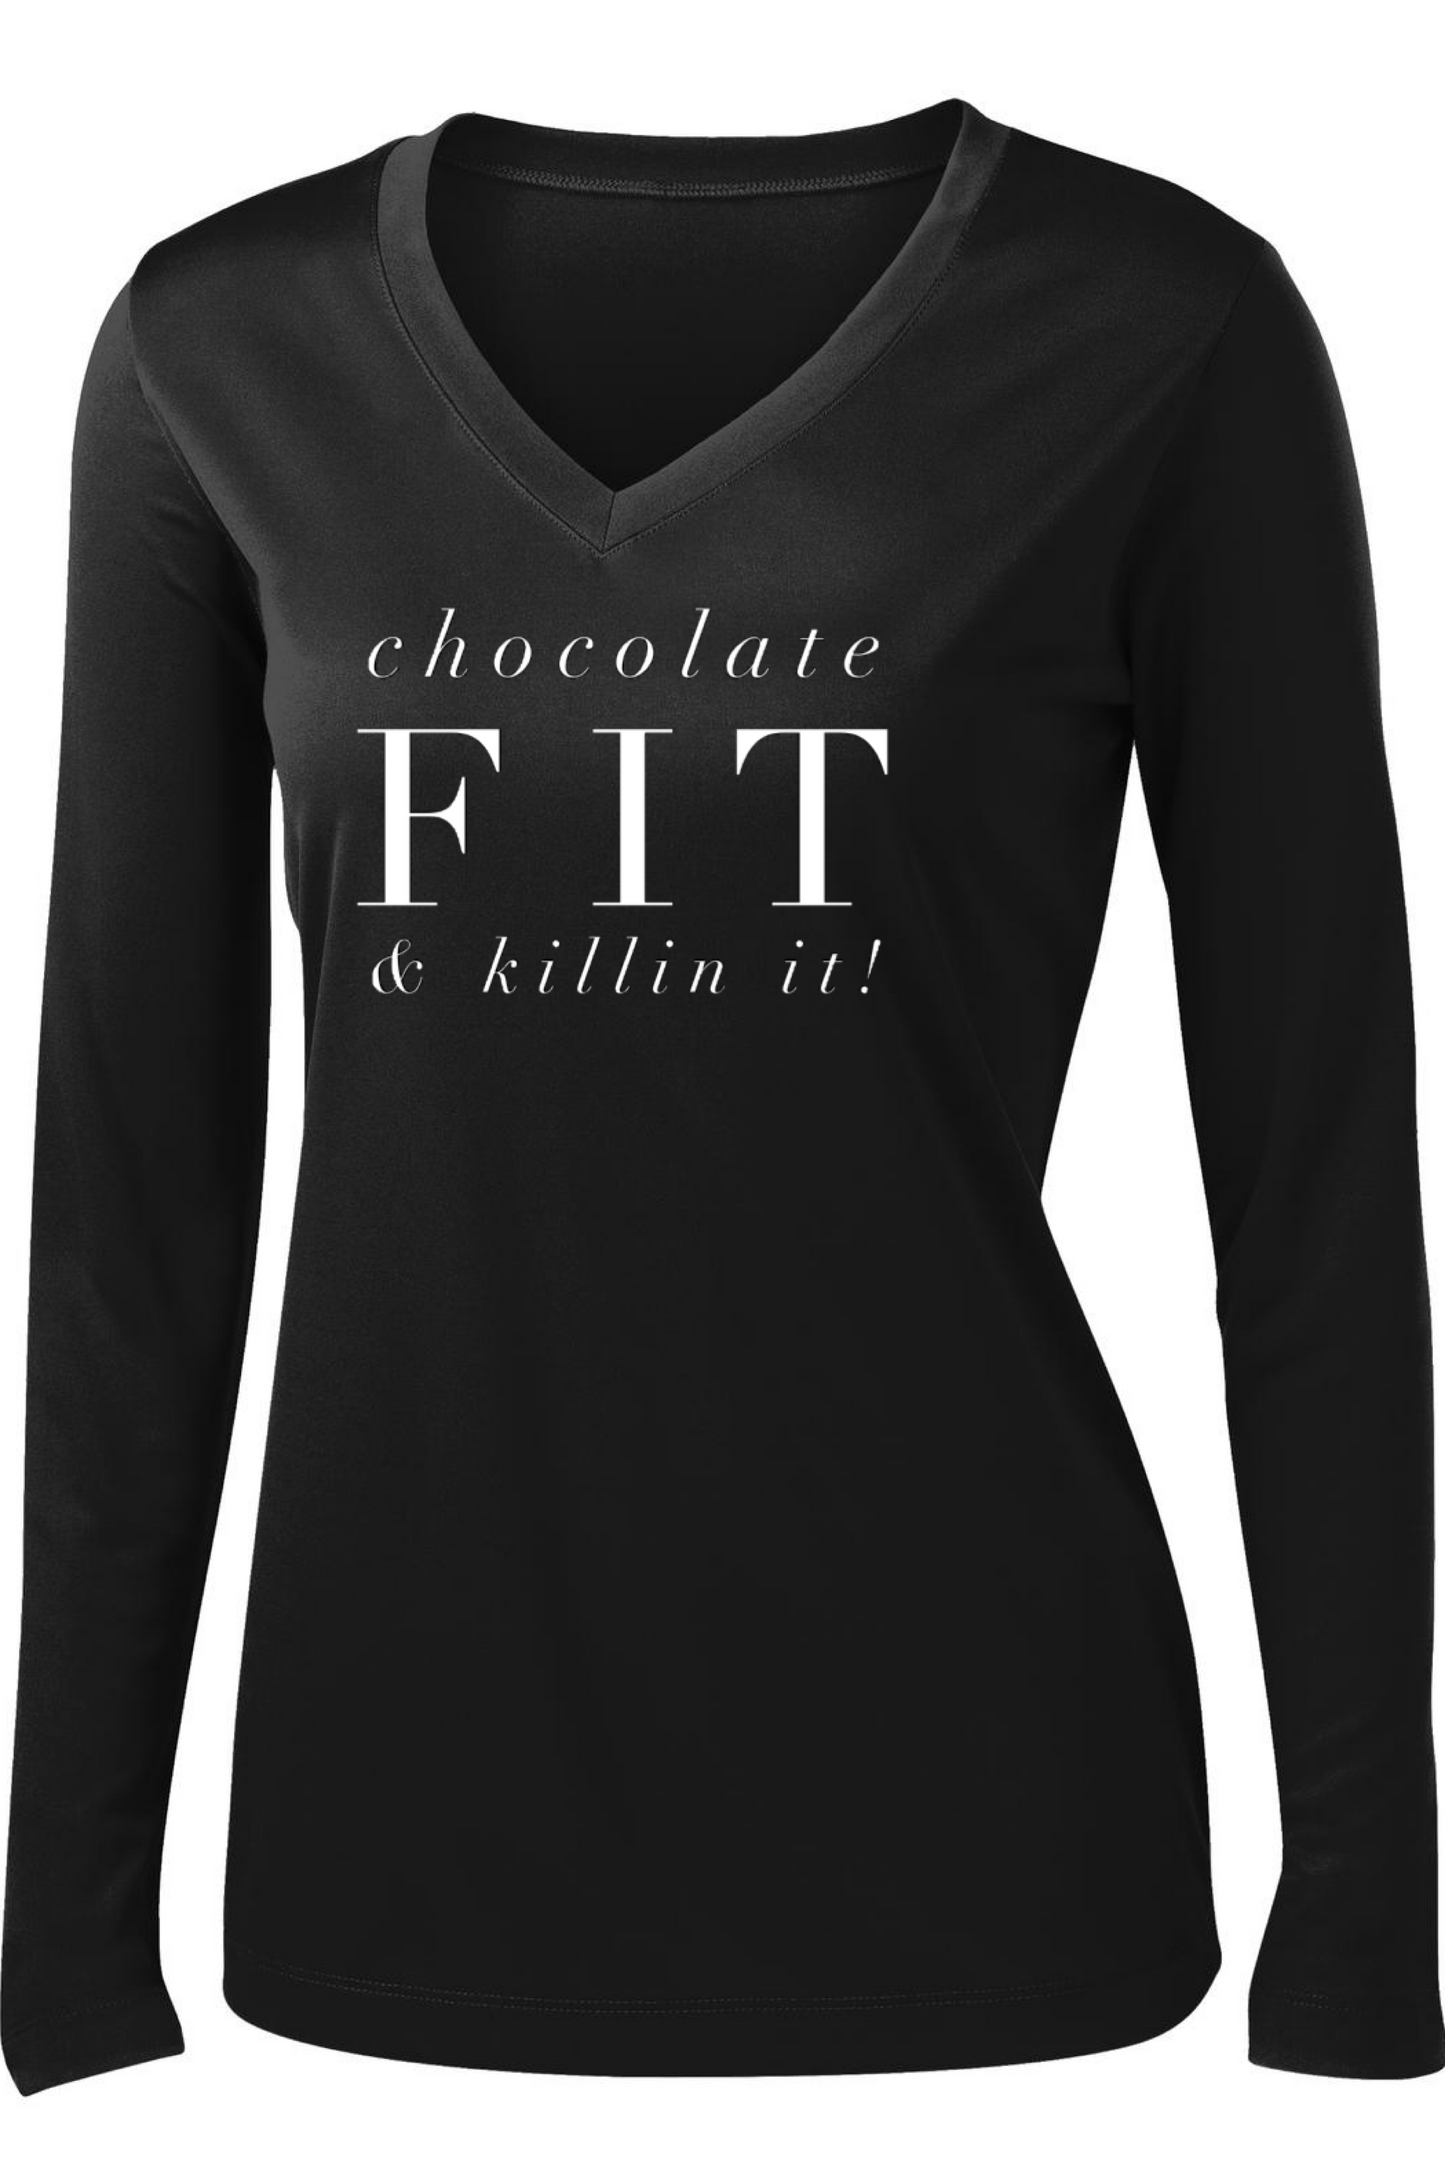 Chocolate Fit & Killin' It! Long Sleeve T-shirt